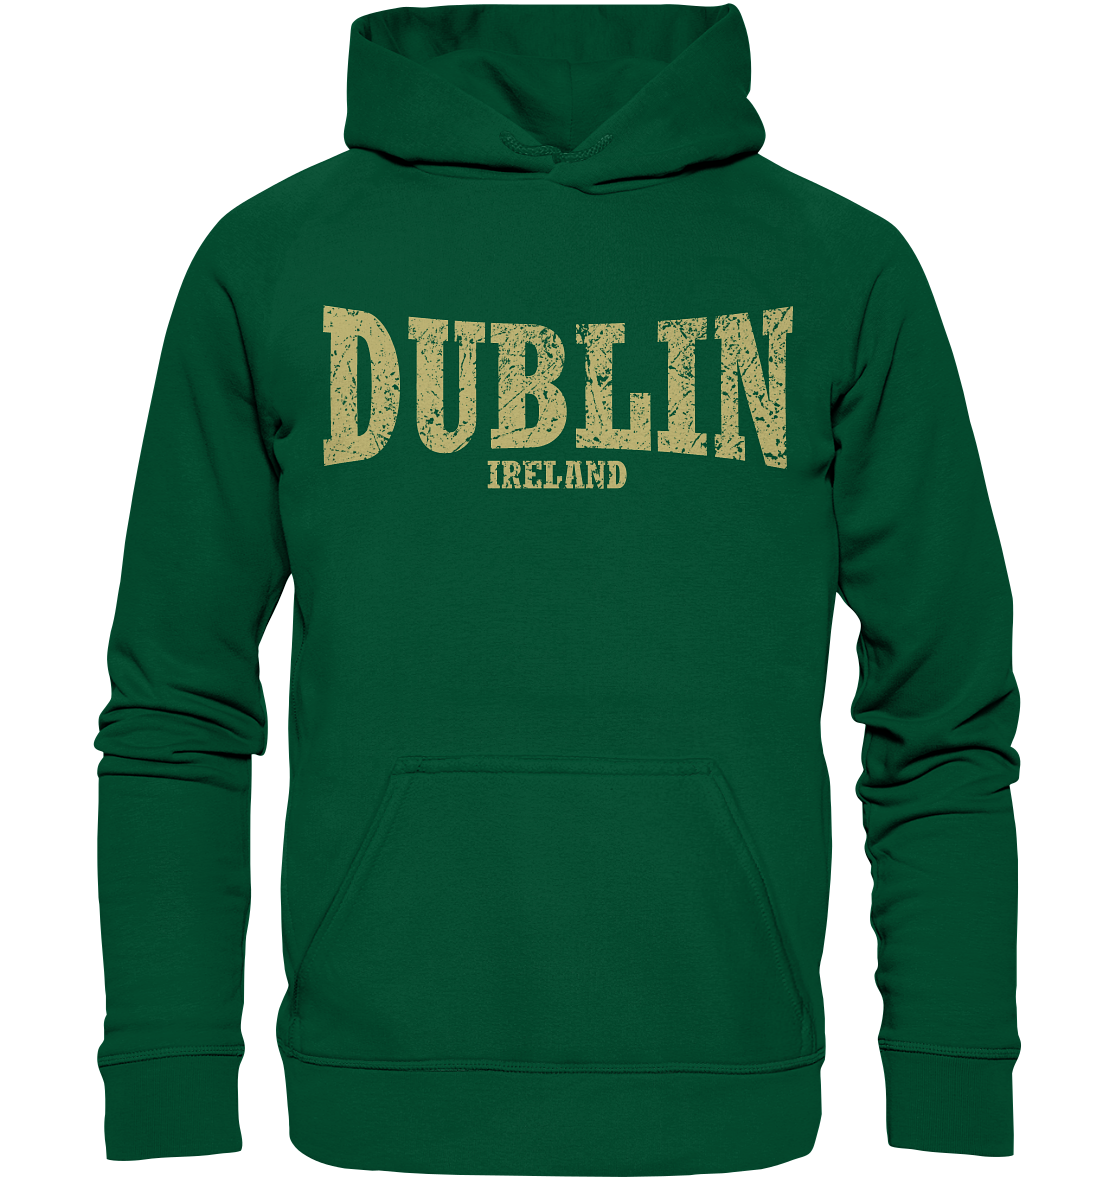 Dublin "Ireland" - Basic Unisex Hoodie